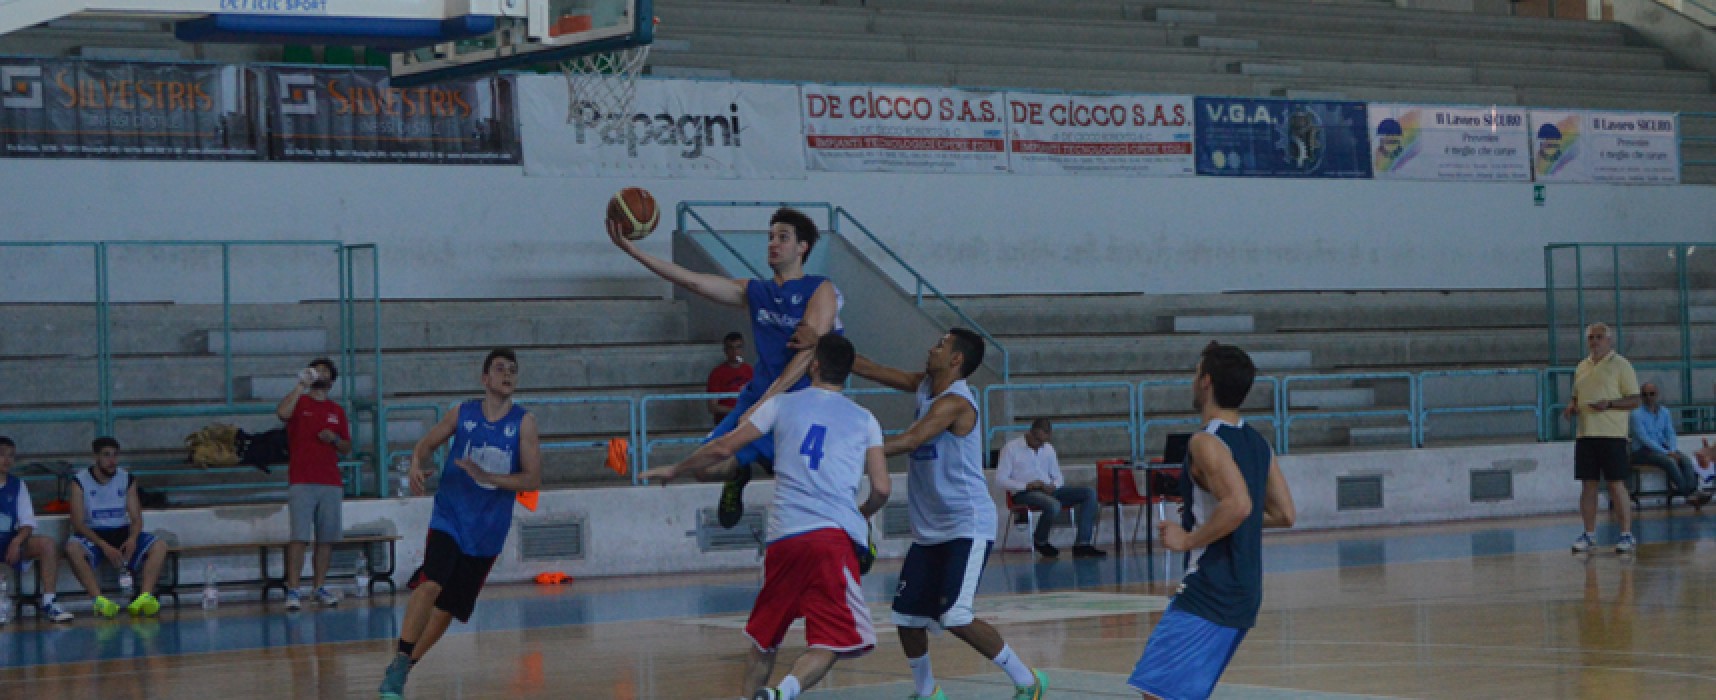 Playoff Basket, in casa Ambrosia fervono i preparativi per gara 1 ad Agropoli